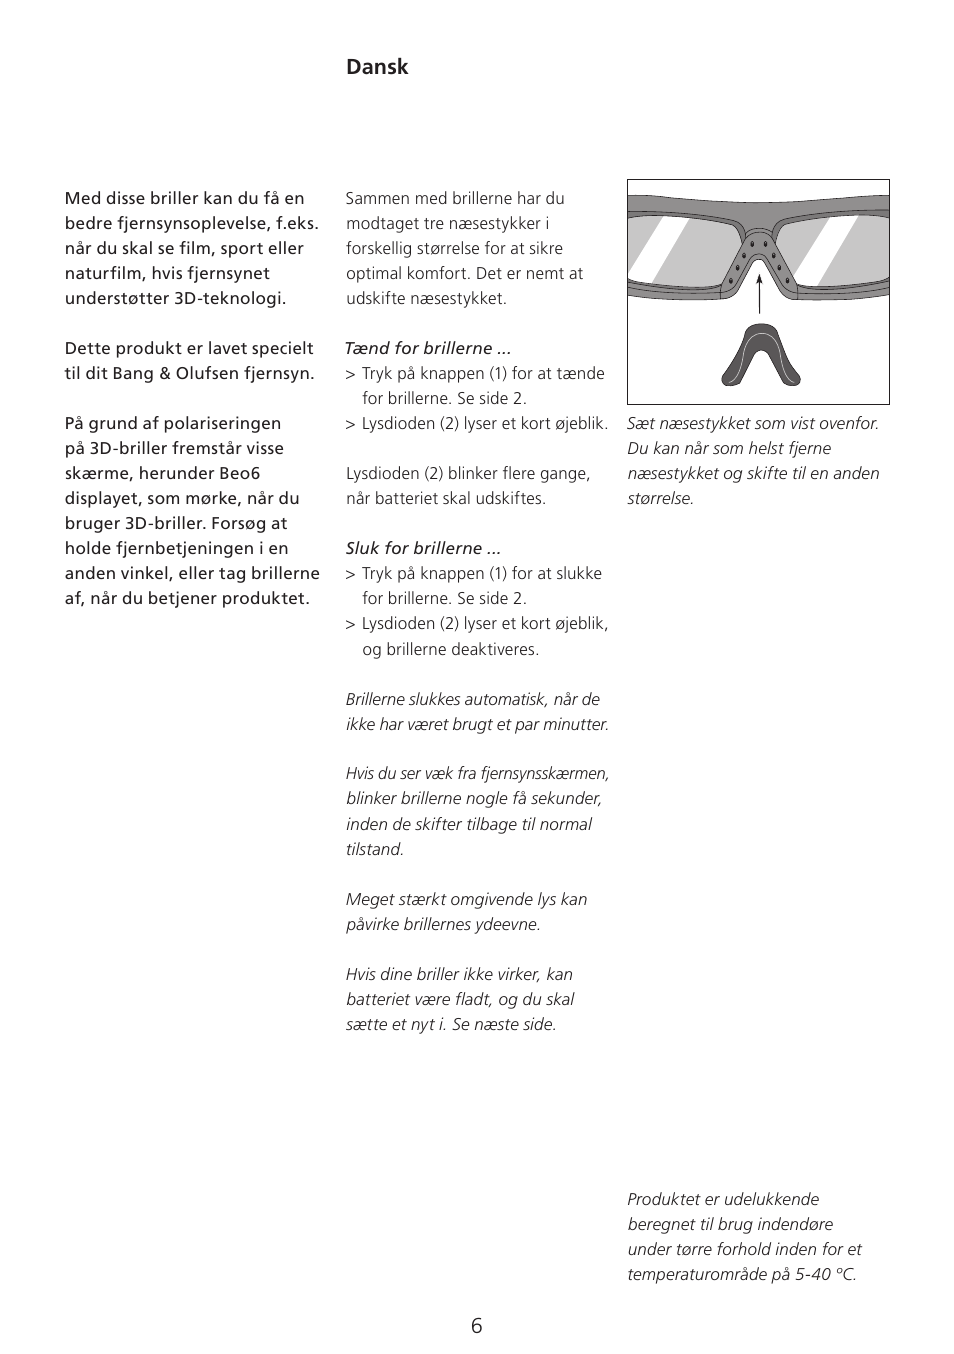 Dansk (danish) , 6, Dansk | Bang & Olufsen 3D Glasses - User Guide User  Manual | Page 6 / 59